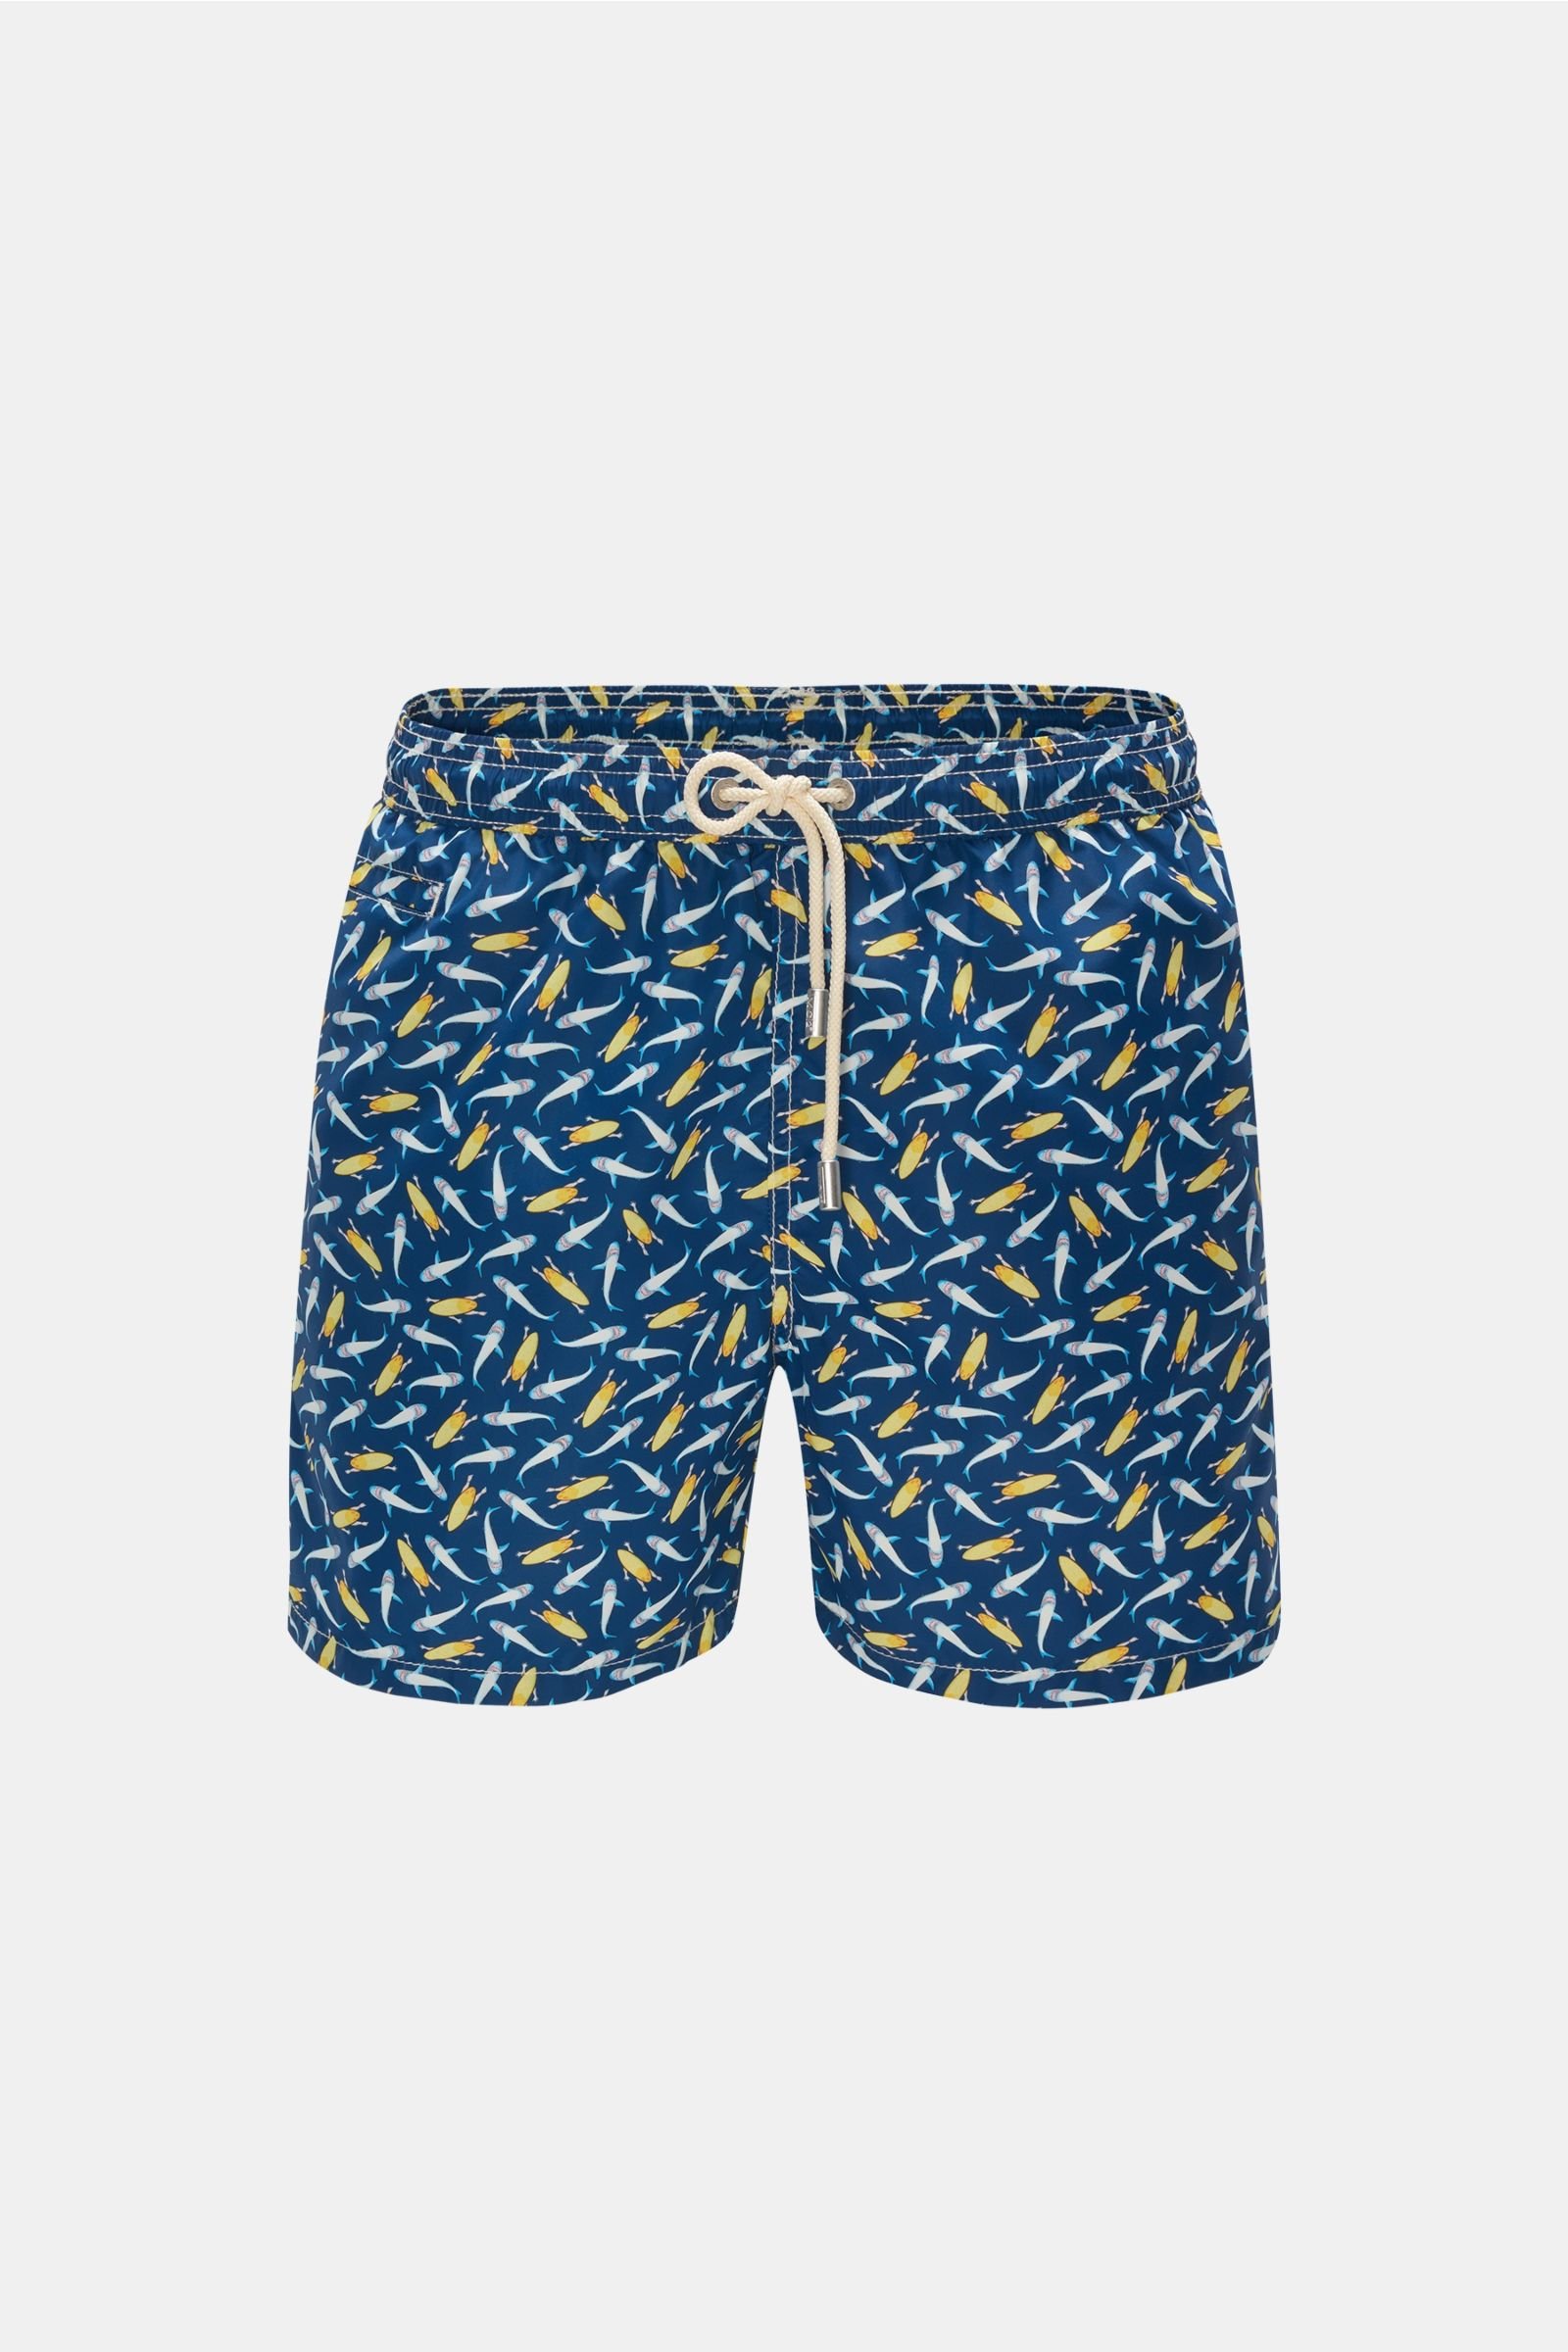 Swim shorts 'Downview Shark' dark blue/white patterned